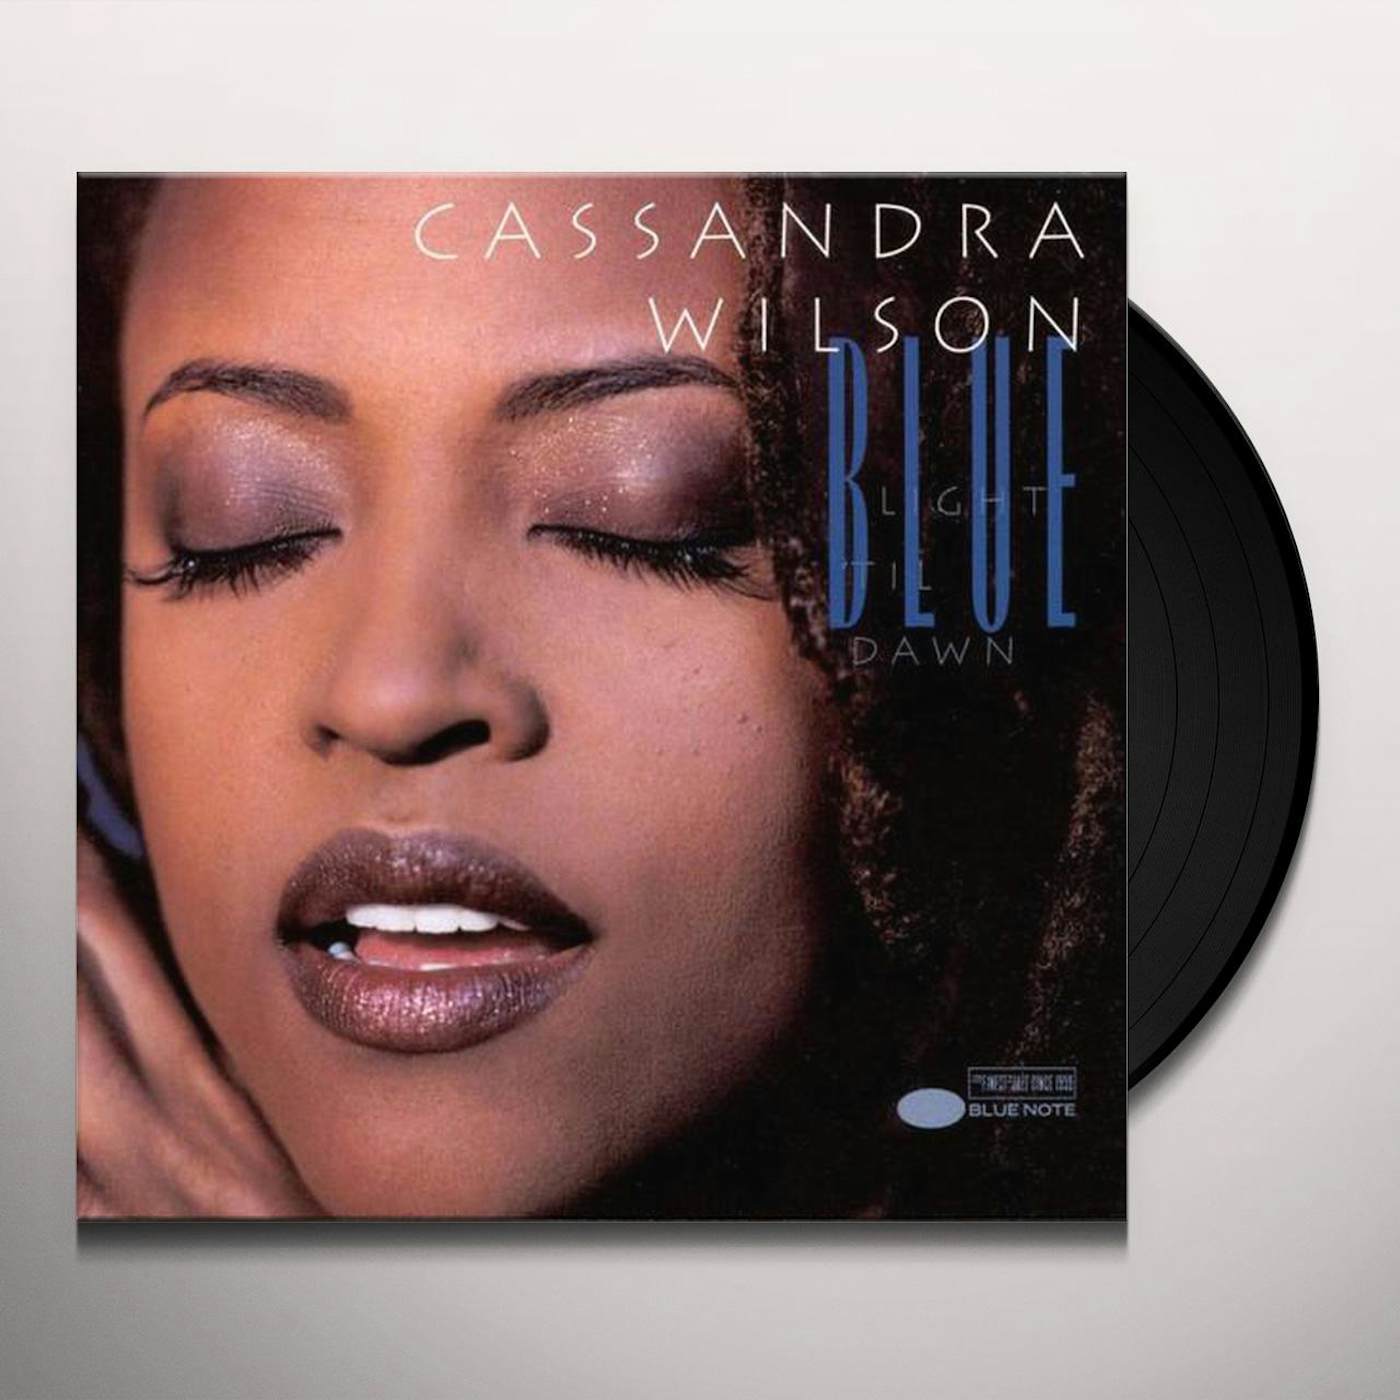 Cassandra Wilson BLUE LIGHT TIL DAWN Vinyl Record